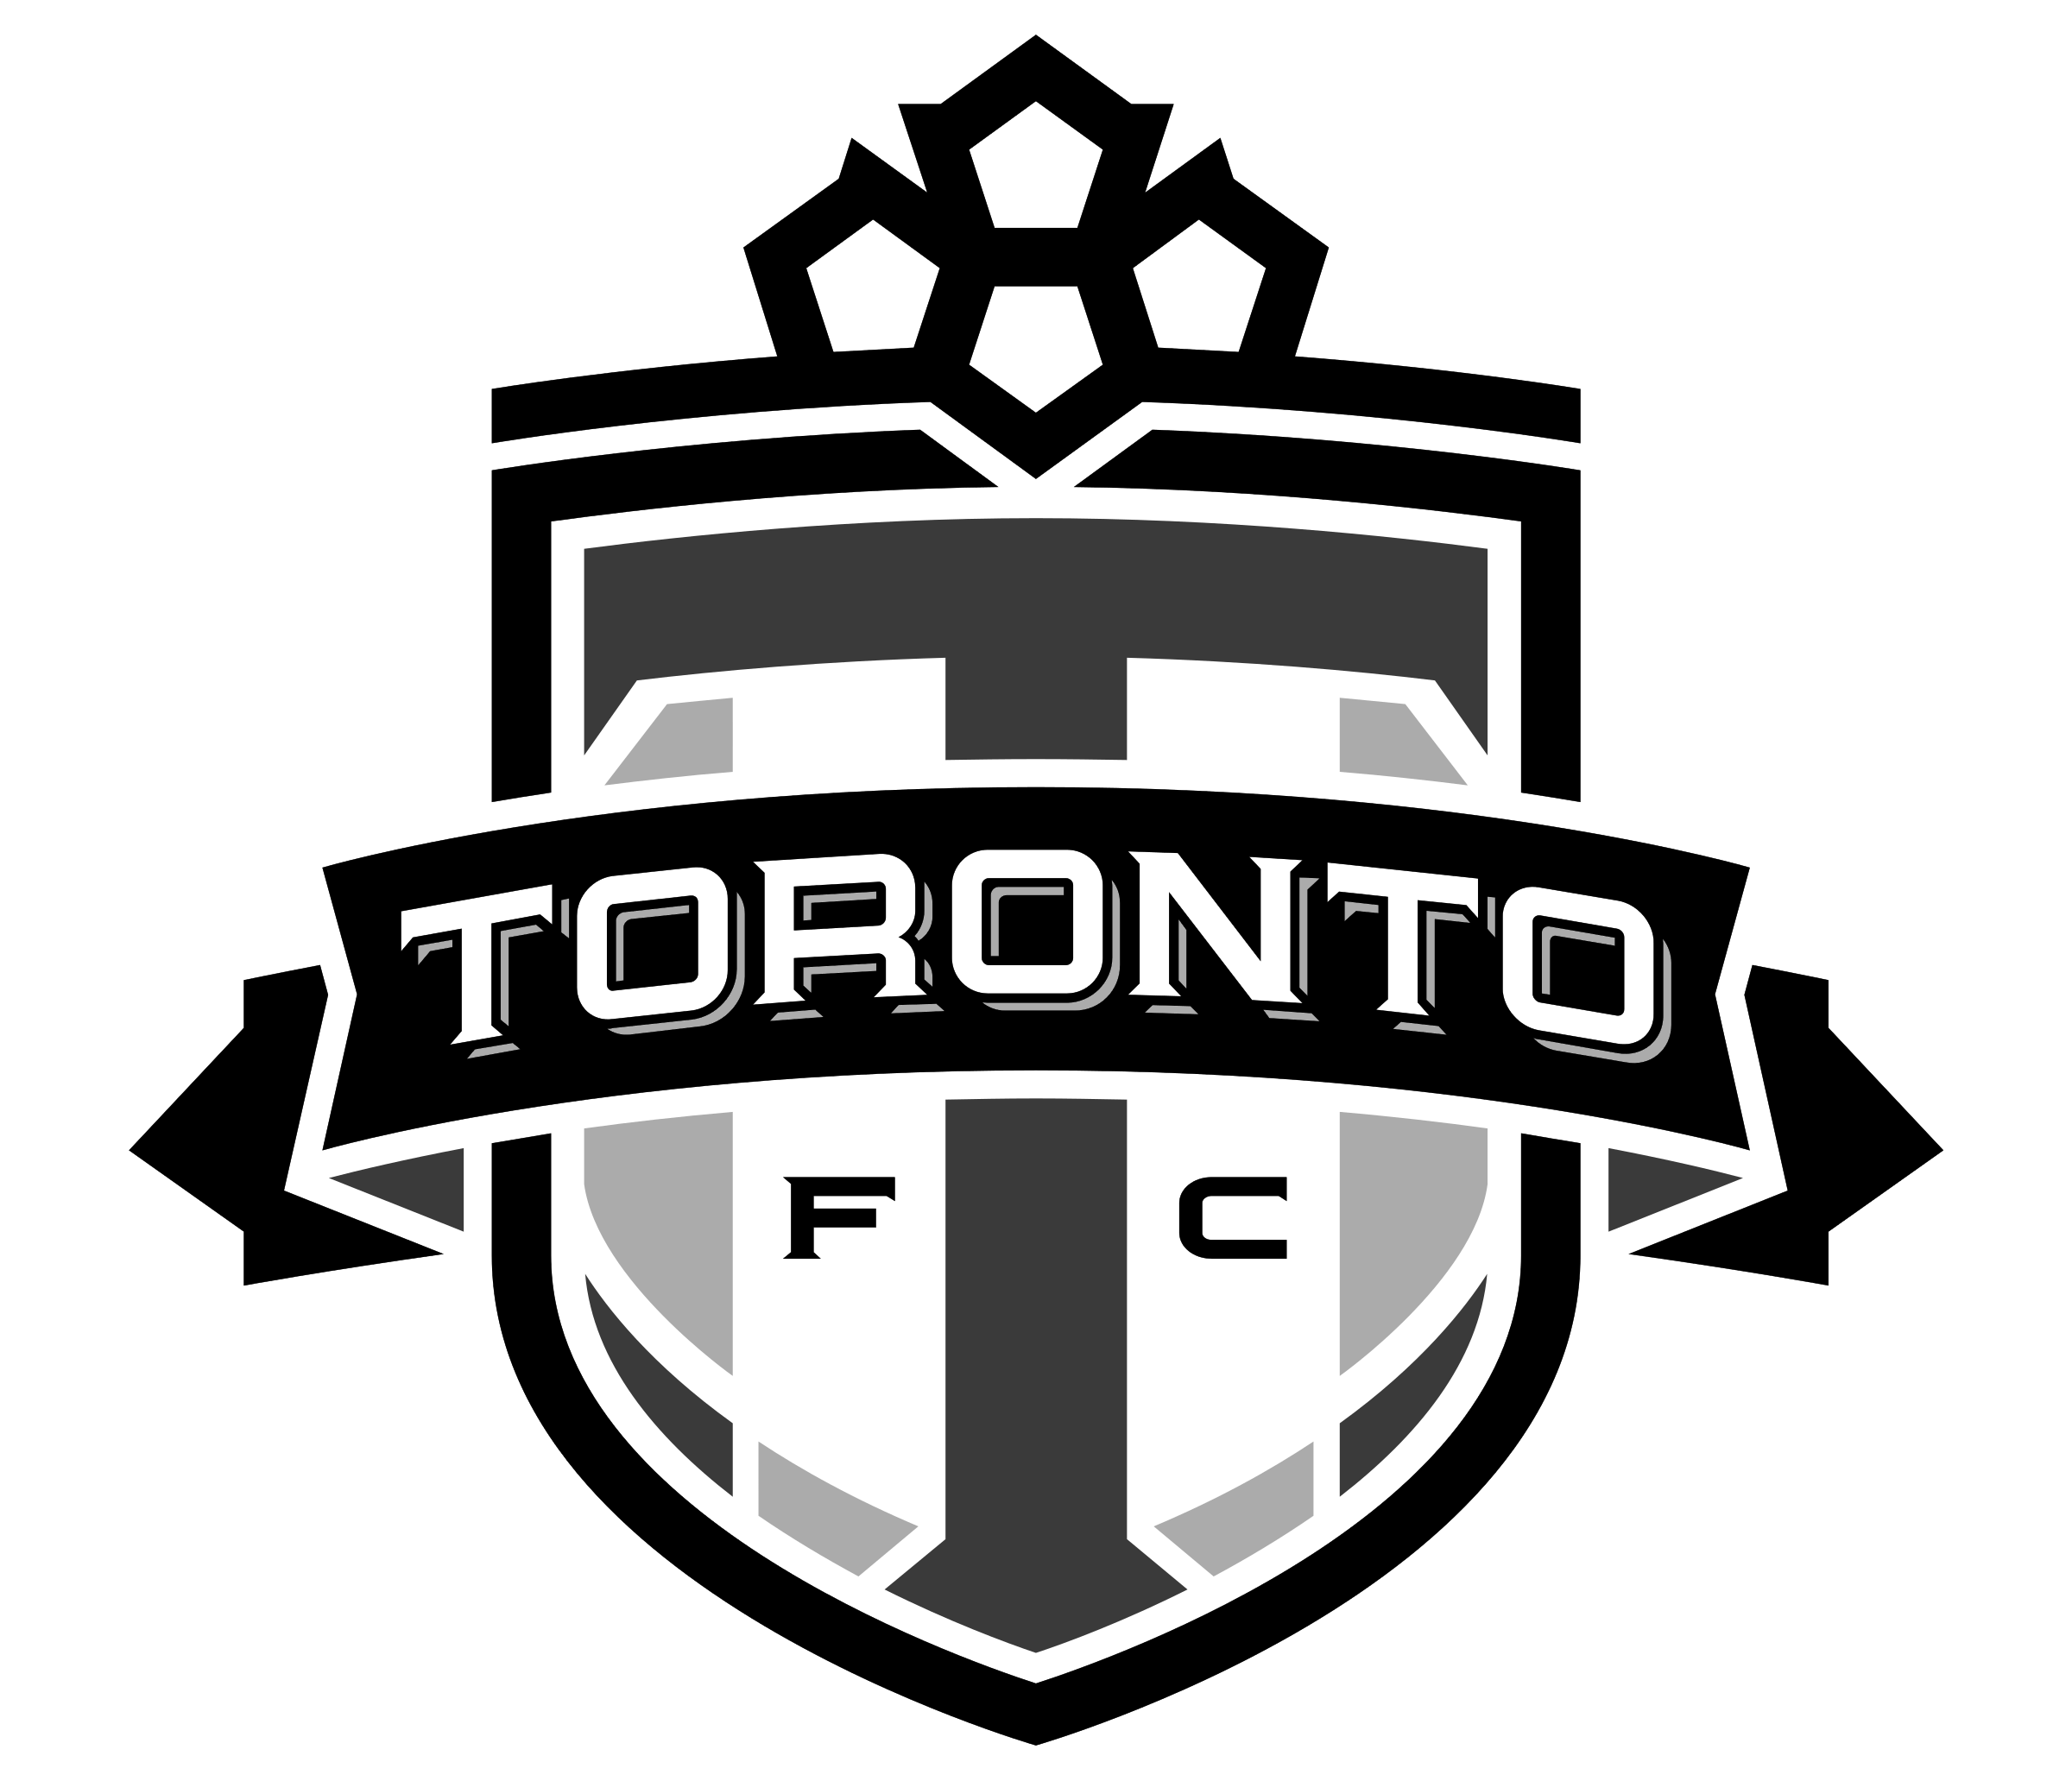 Toronto Fc Logo Black And White - Toronto Fc, Transparent background PNG HD thumbnail